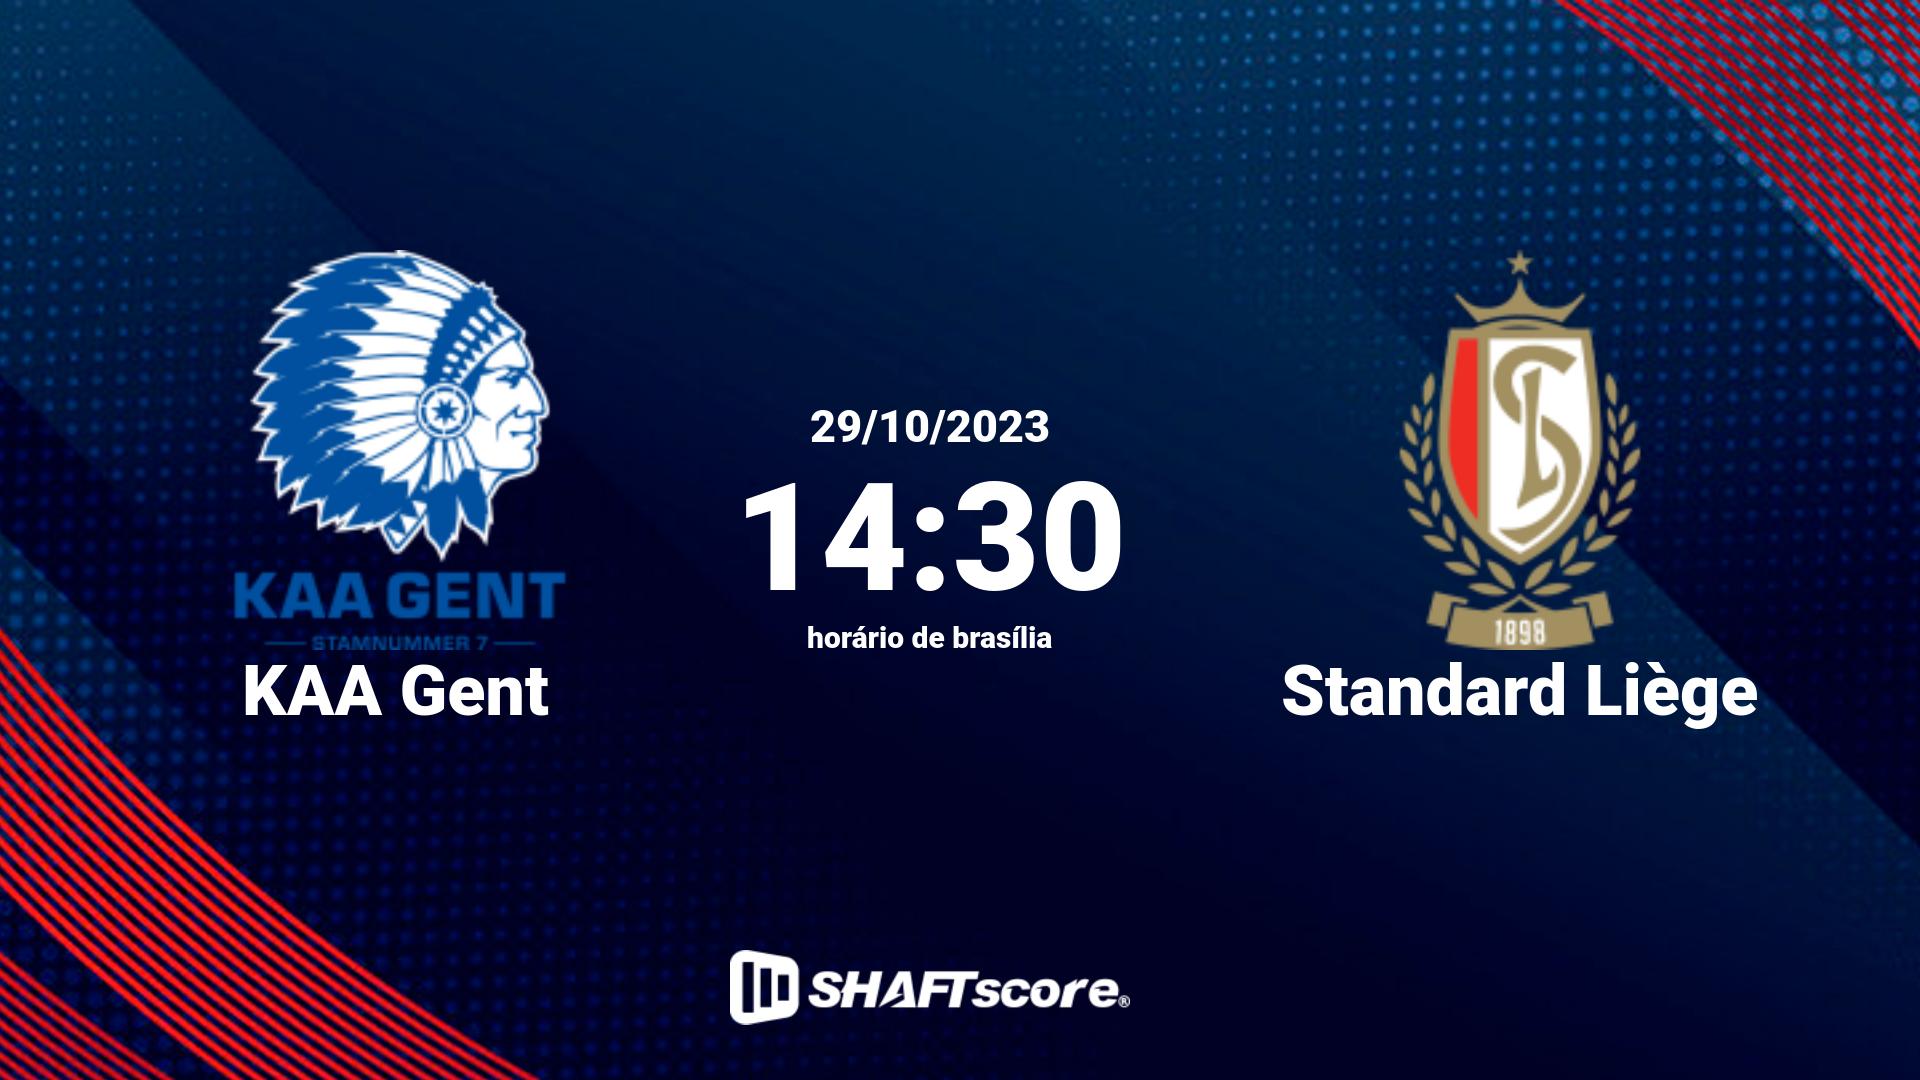 Estatísticas do jogo KAA Gent vs Standard Liège 29.10 14:30